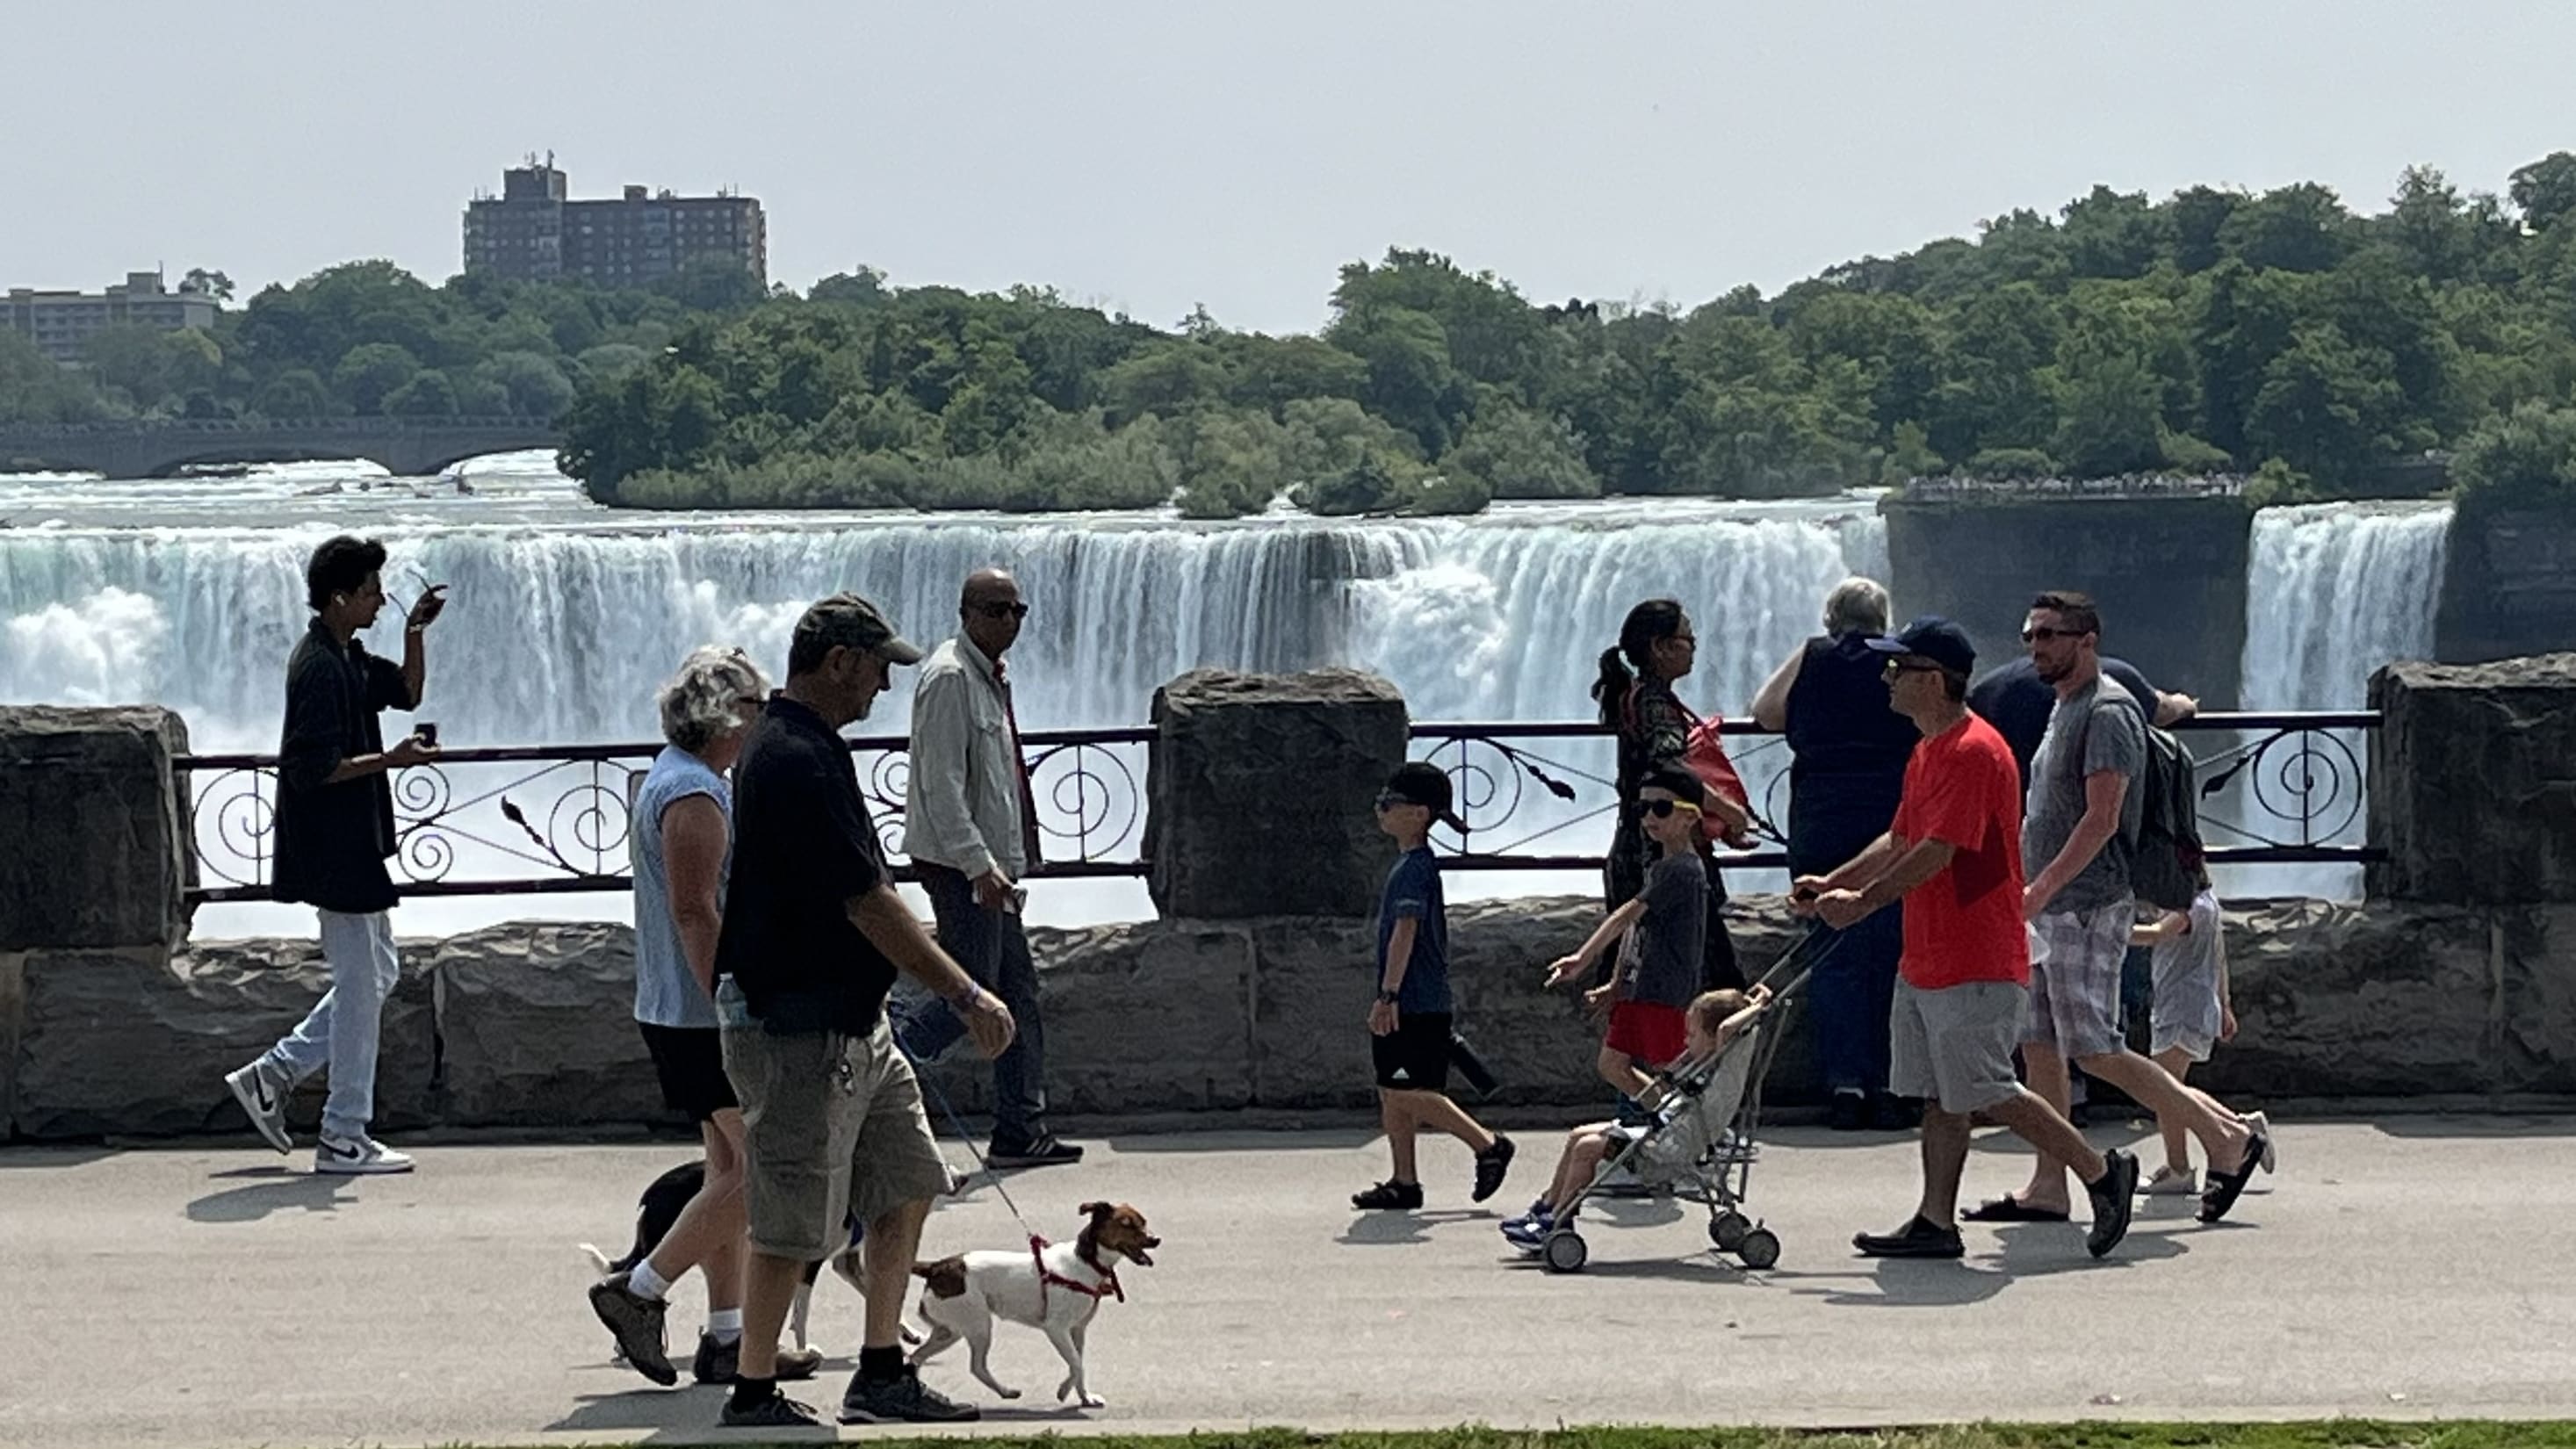 Niagara Falls pic 2023